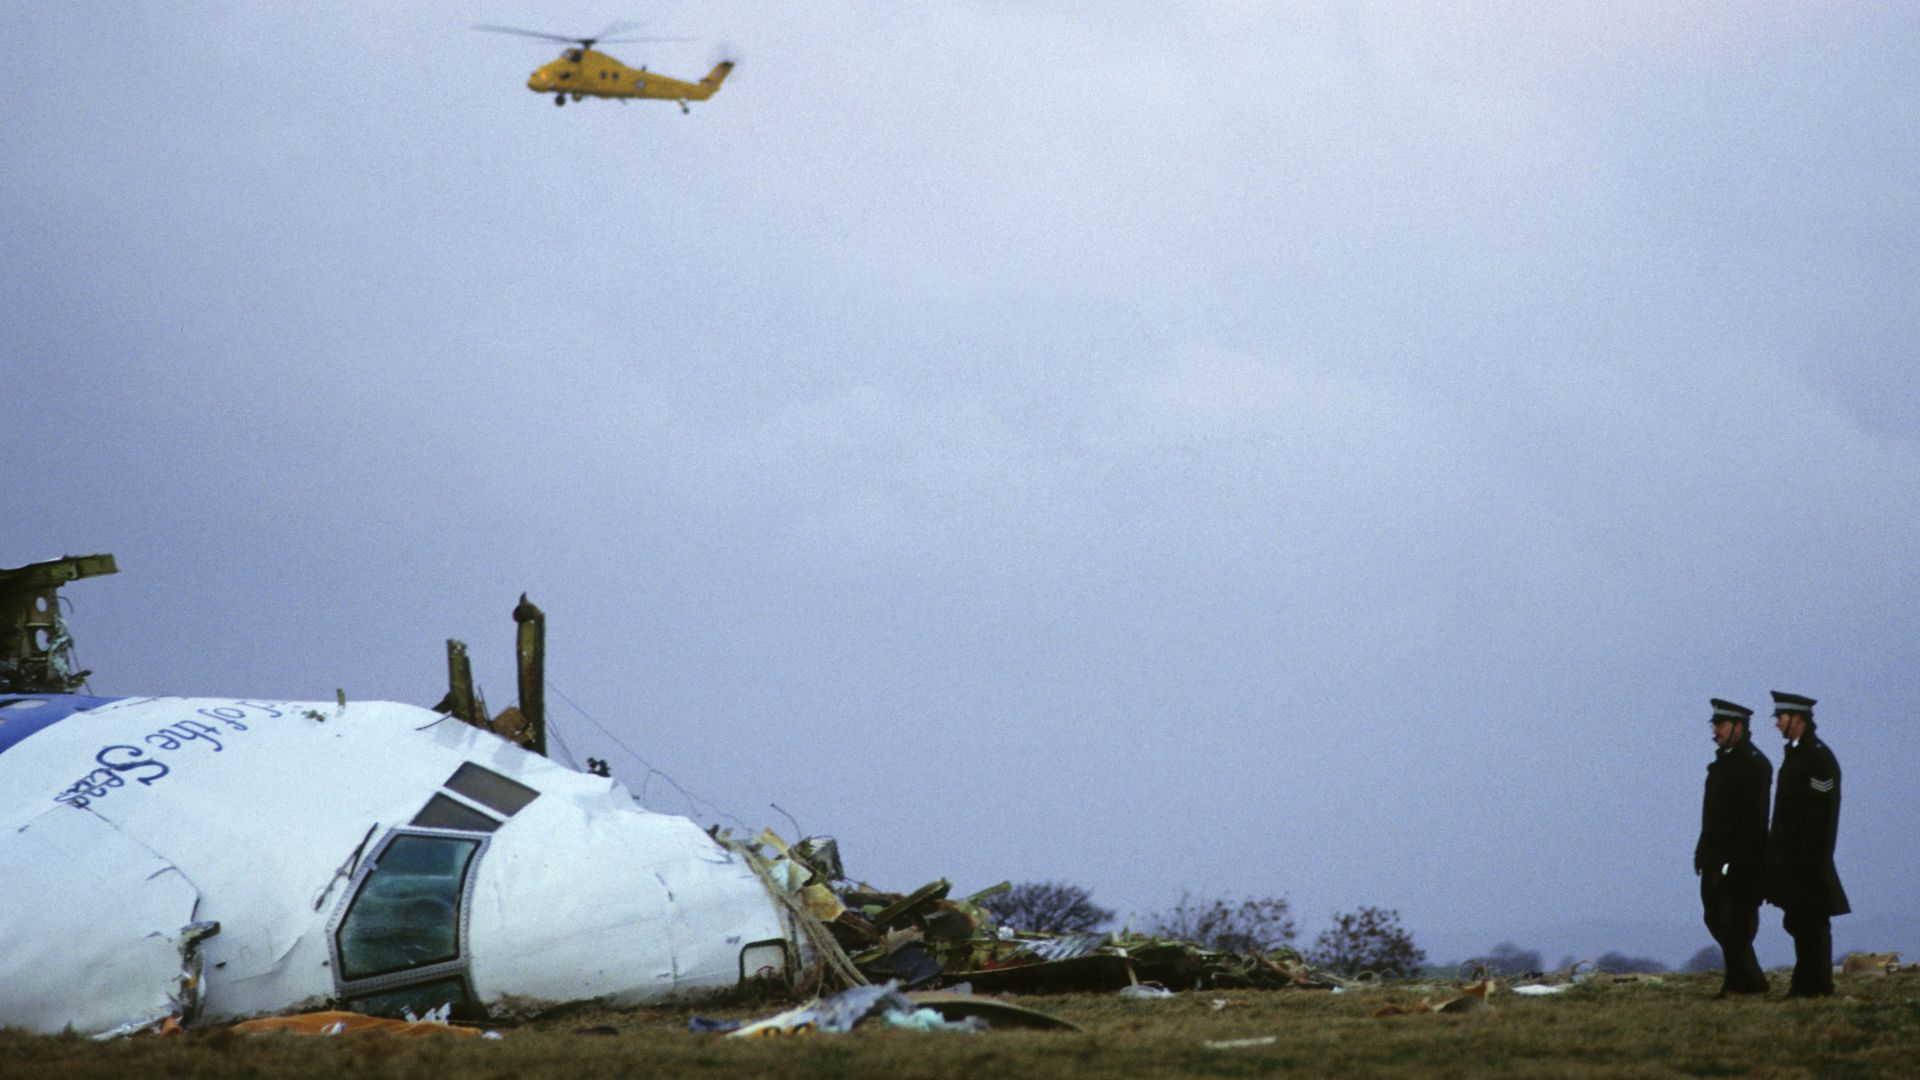 The wreckage of Pan Am flight 103 in Lockerbie, Scotland, on Dec. 21, 1988.